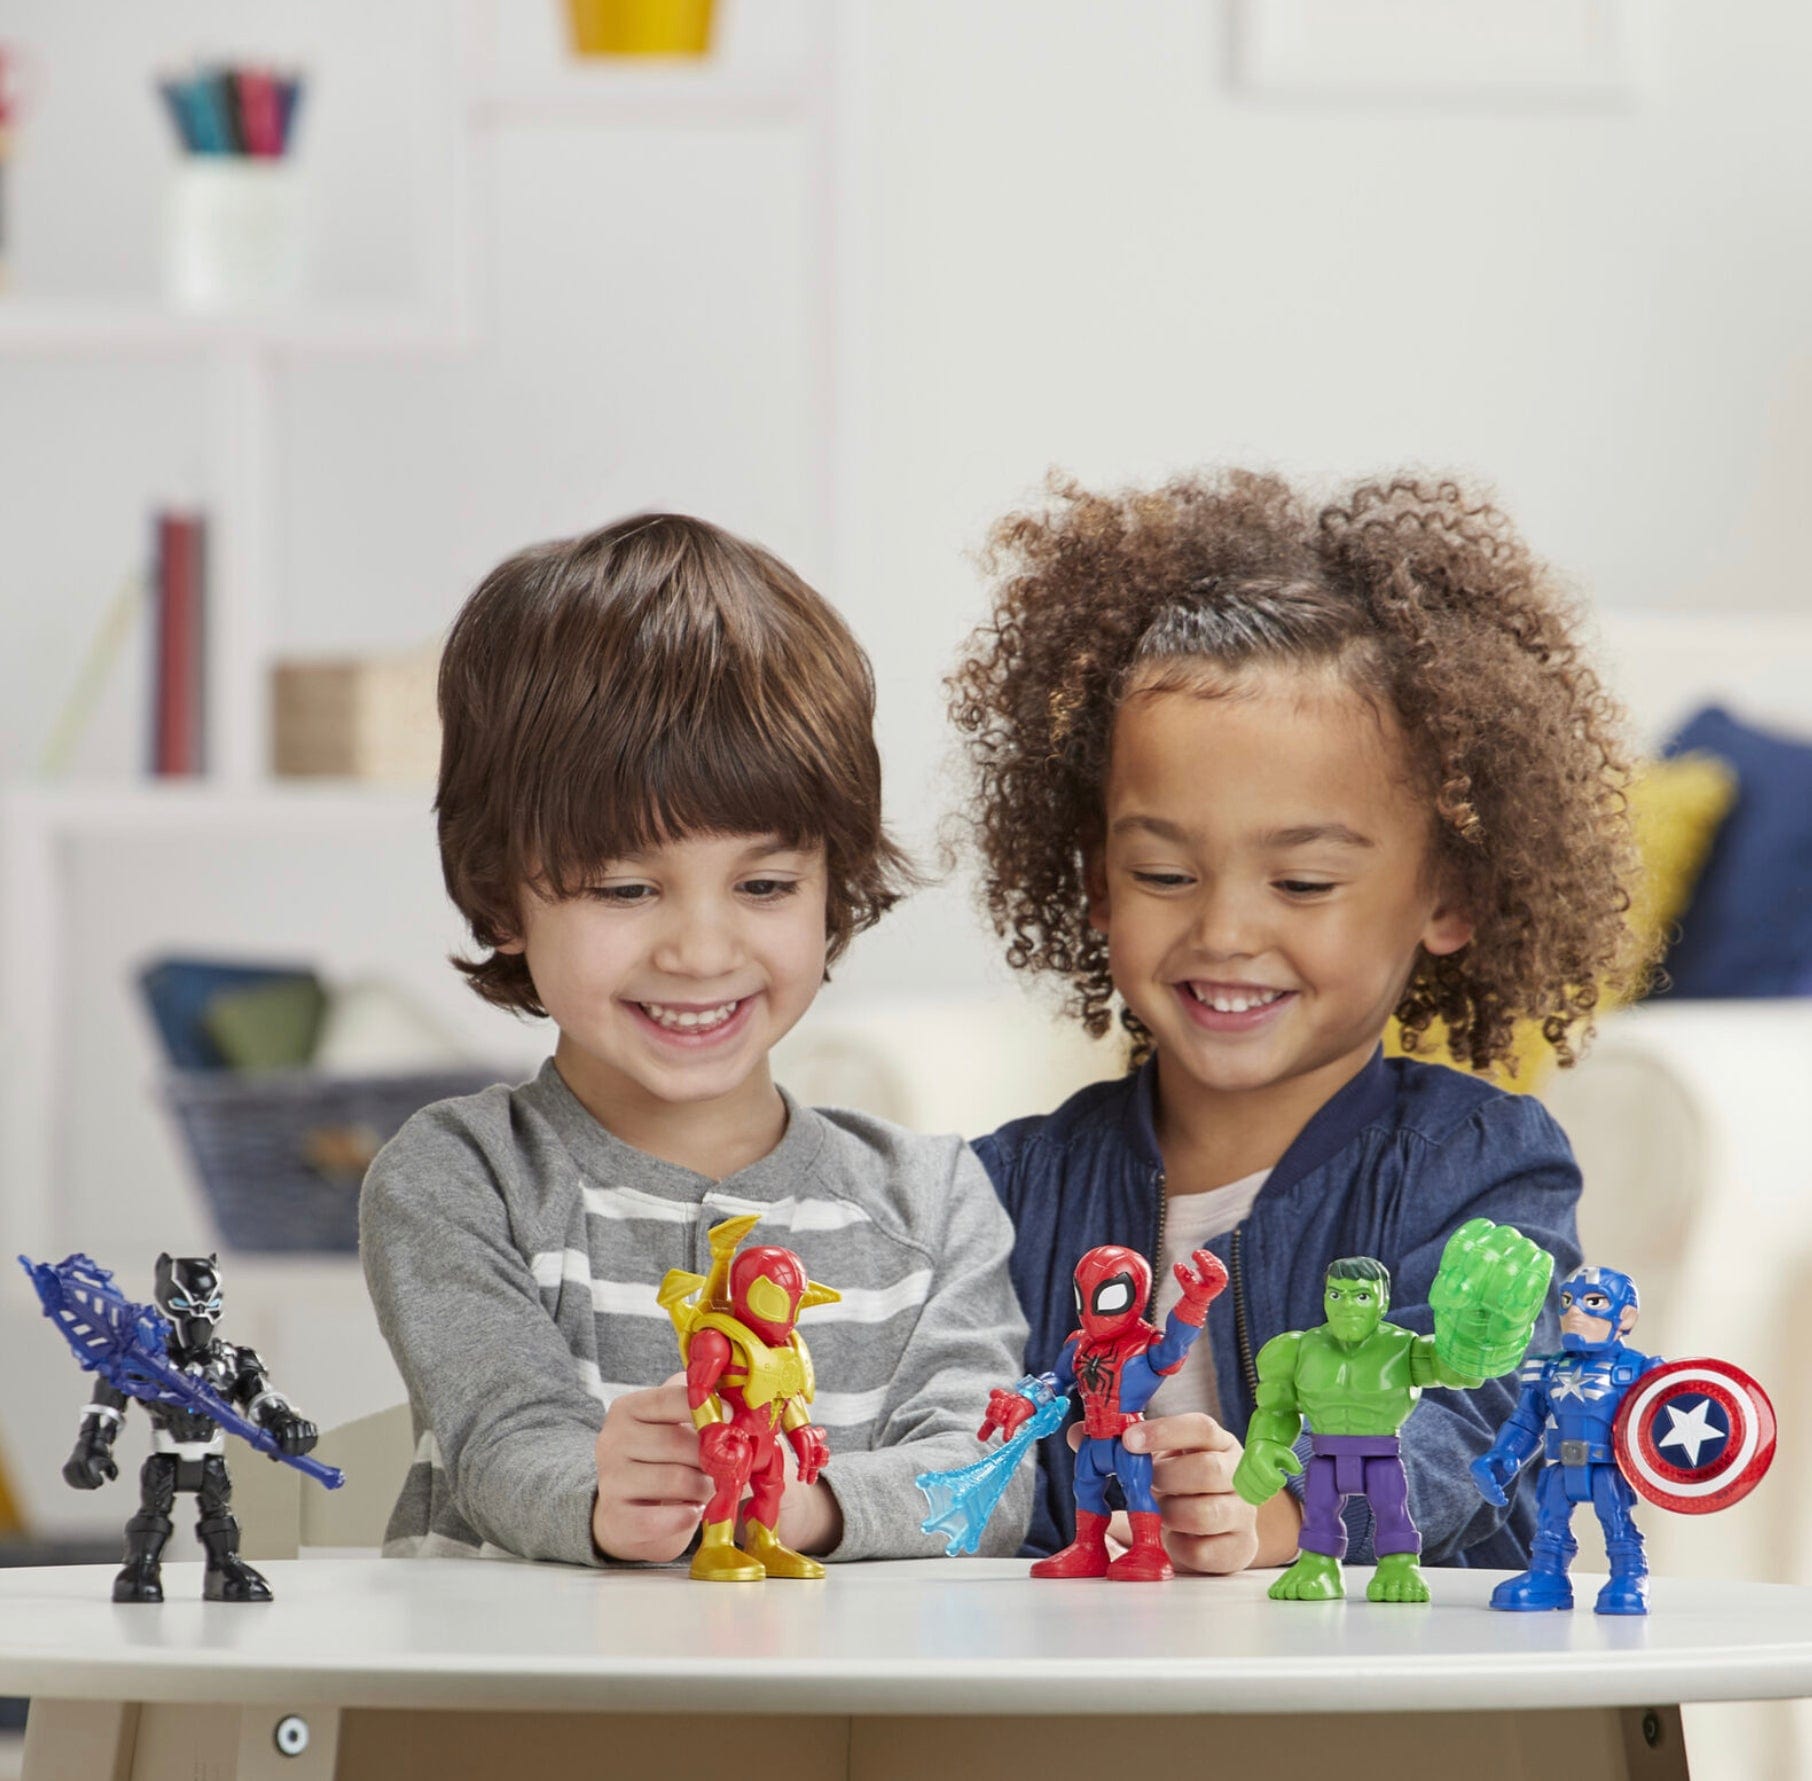 Marvel Super Hero Adventures toys, 12cm Miles Morales Action Figure & Accessory